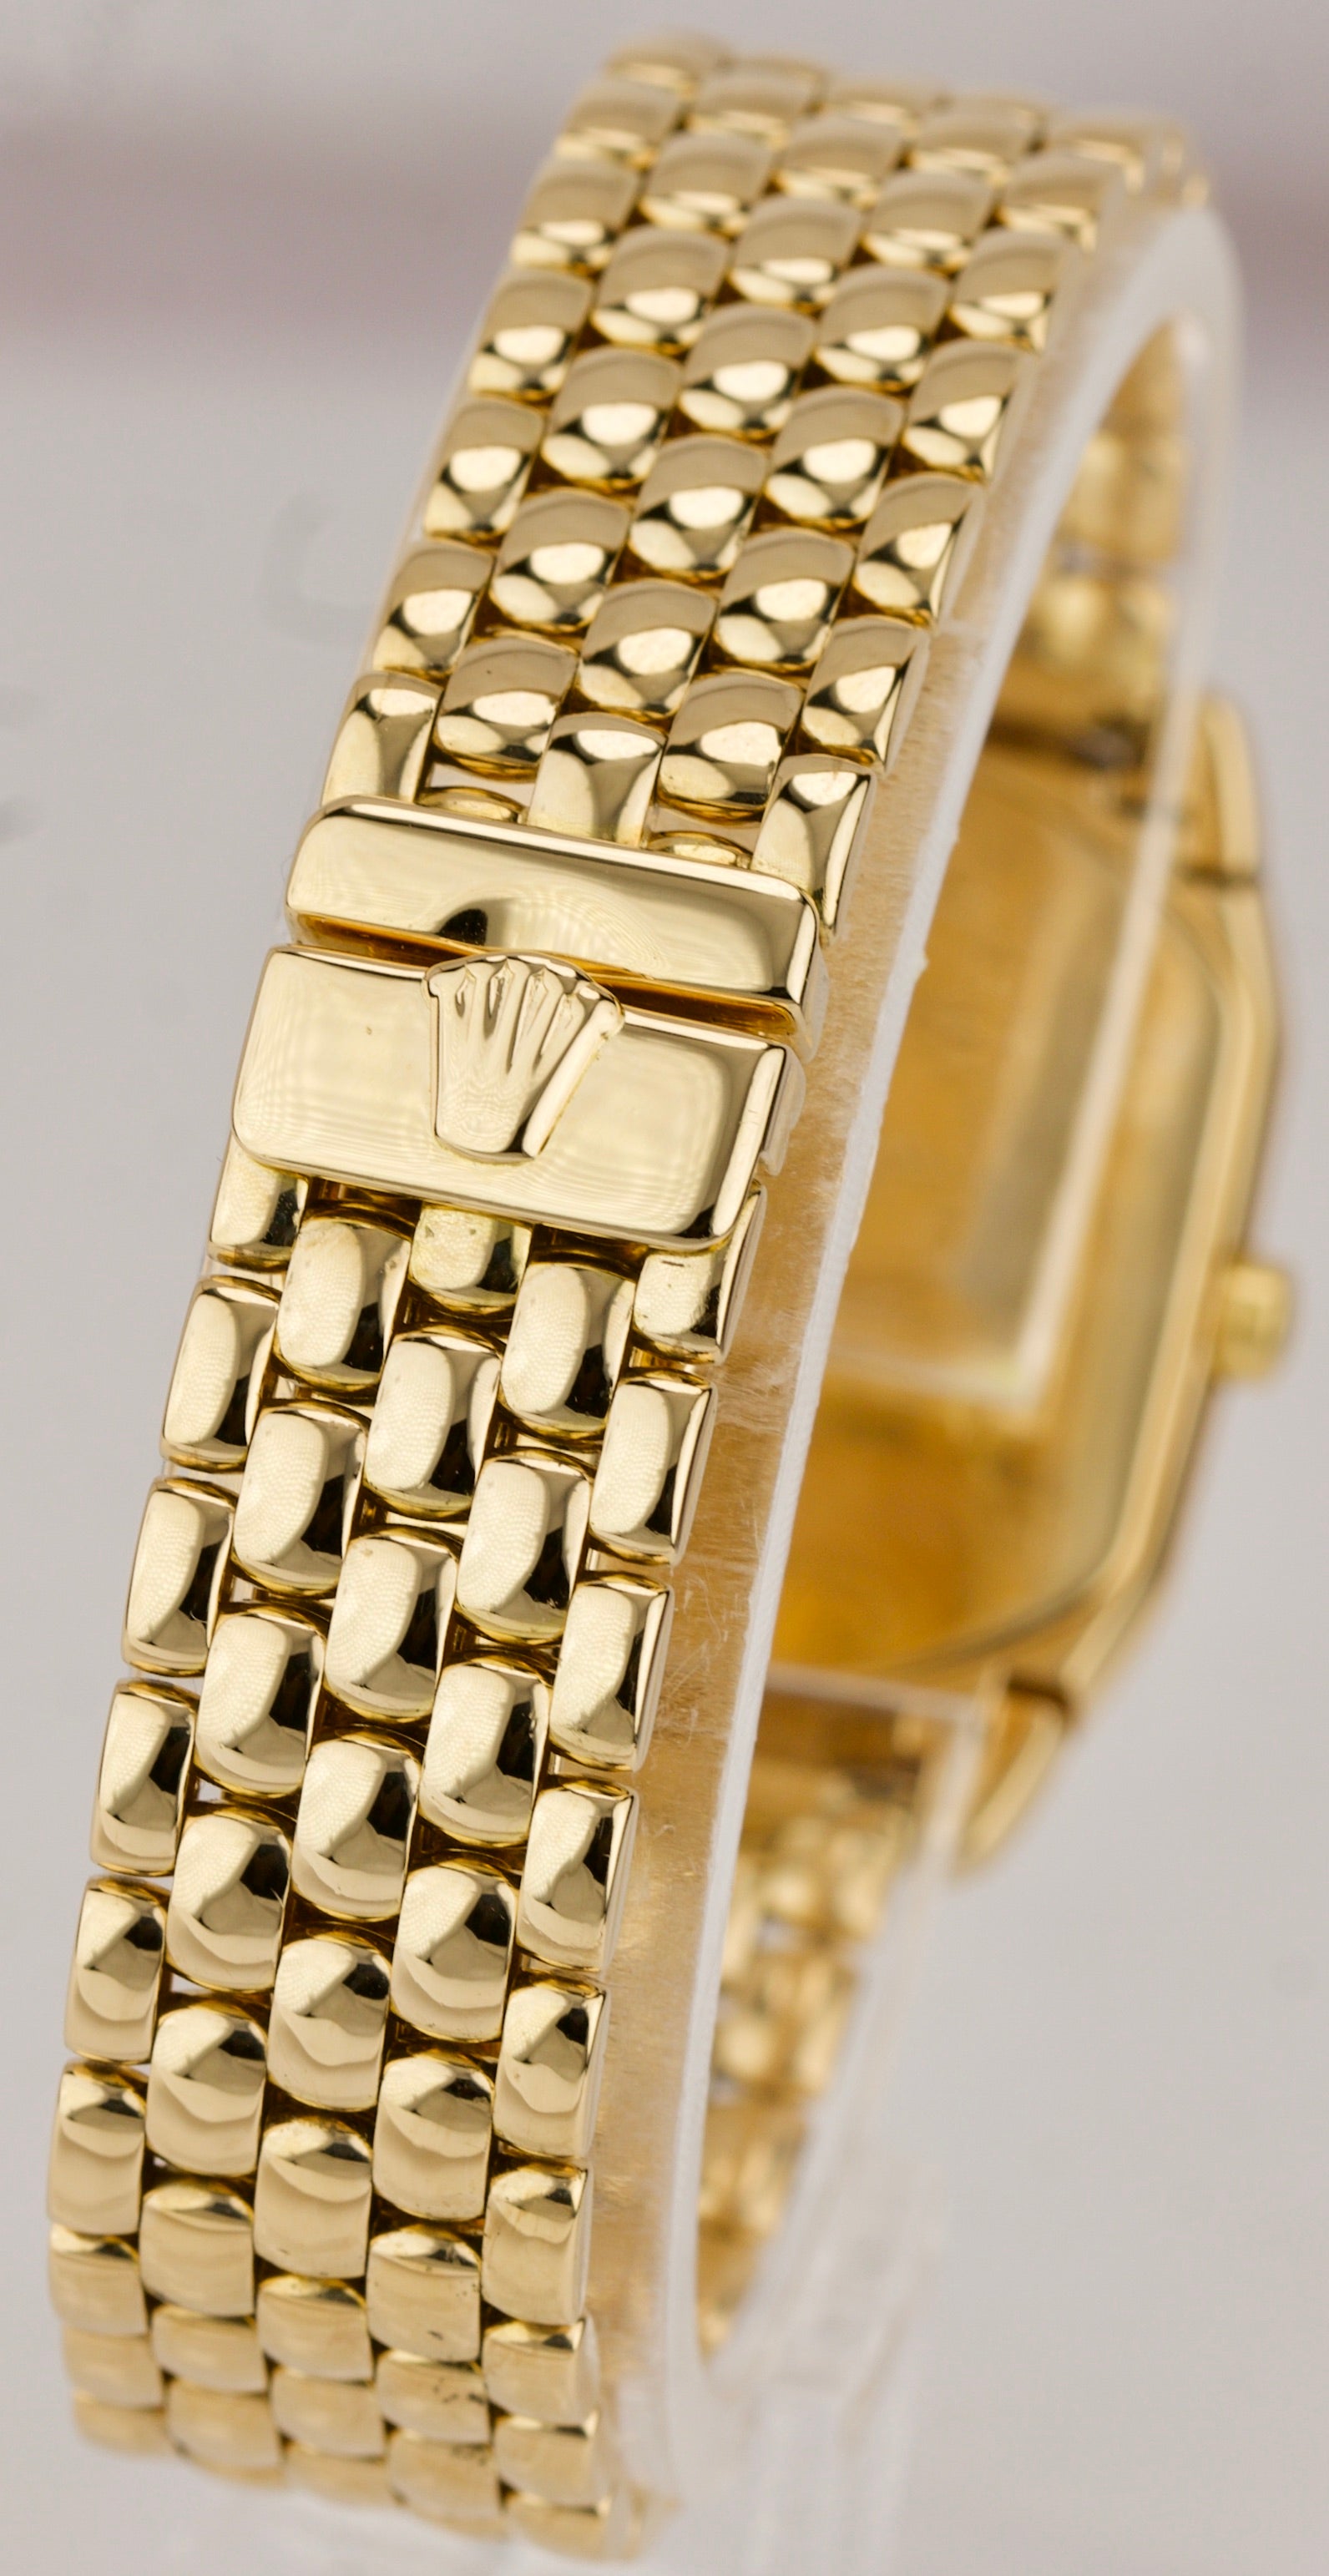 Rolex Cellini Geneve 24mm 18K Yellow Gold Champagne Roman Dial Quartz Watch 6631